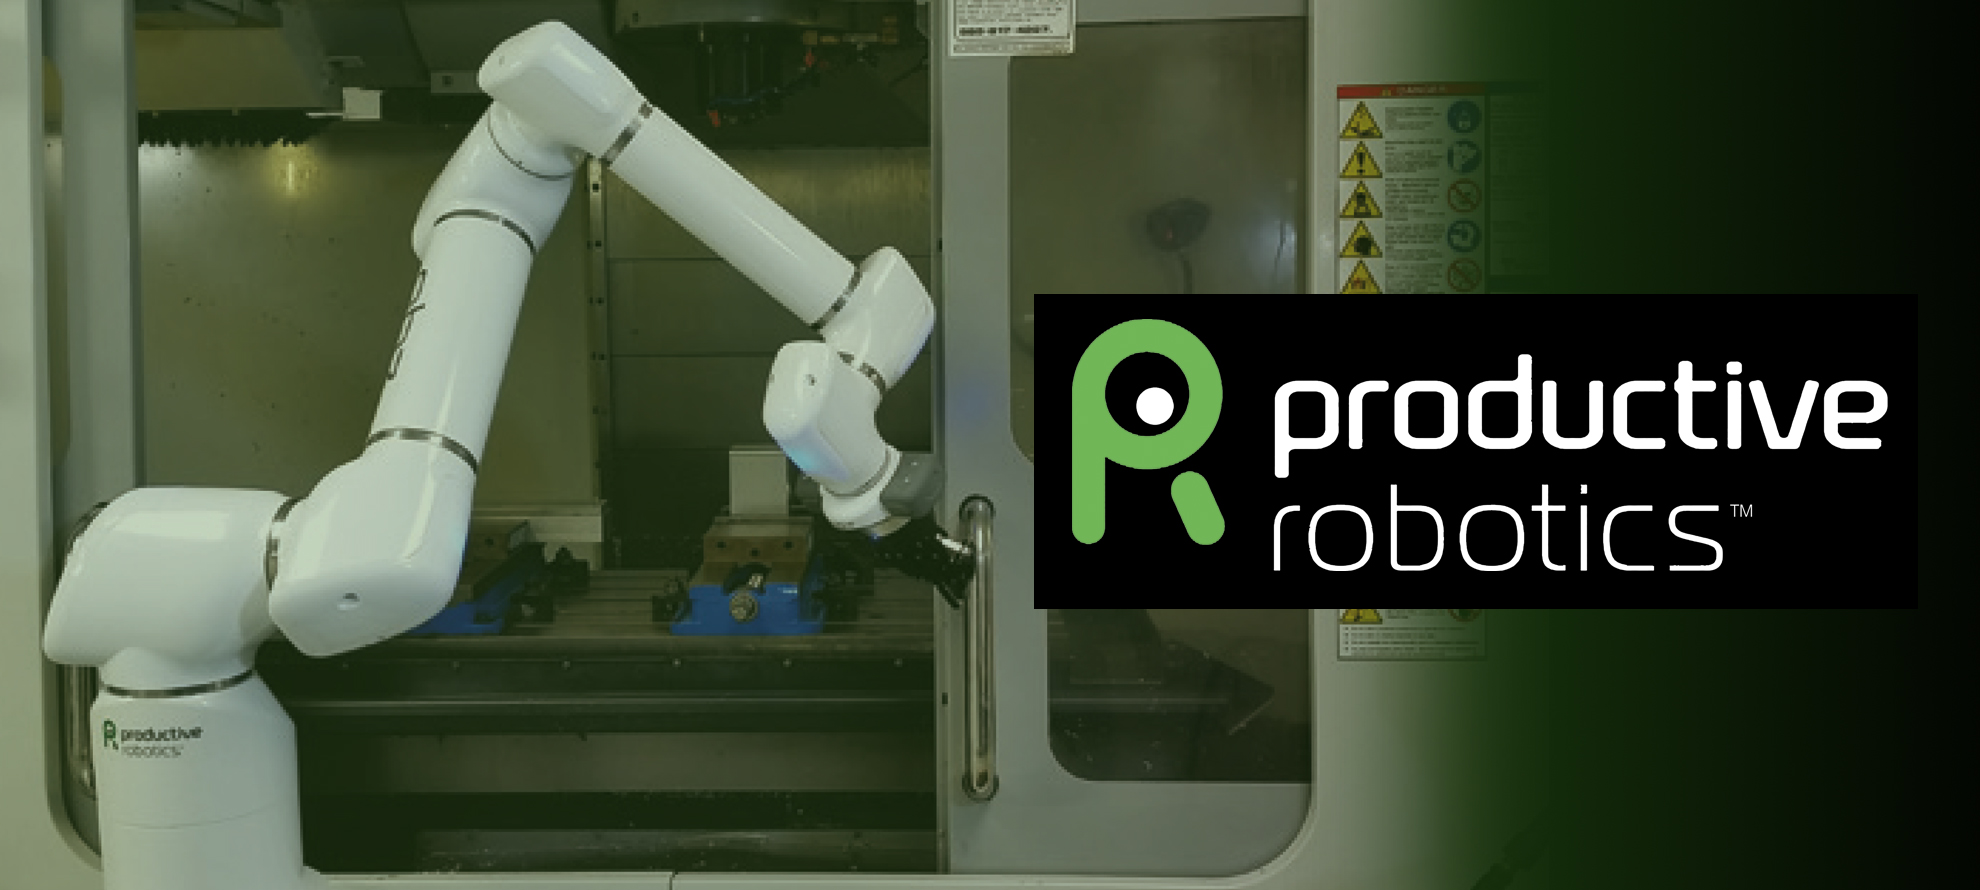 View the Productive Robotics page